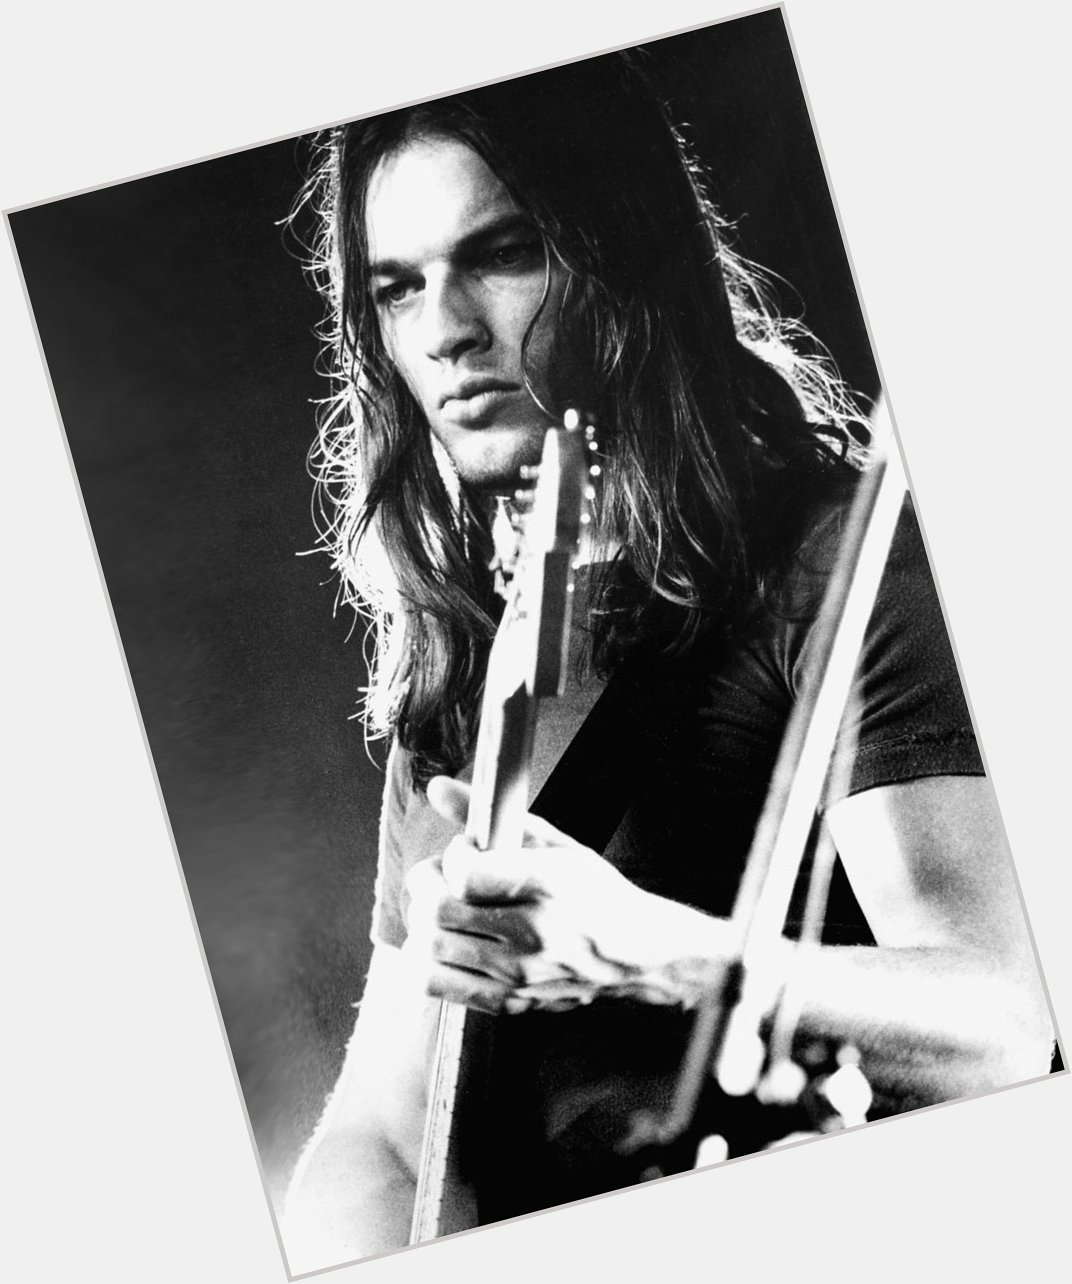 Happy birthday, David Gilmour! 